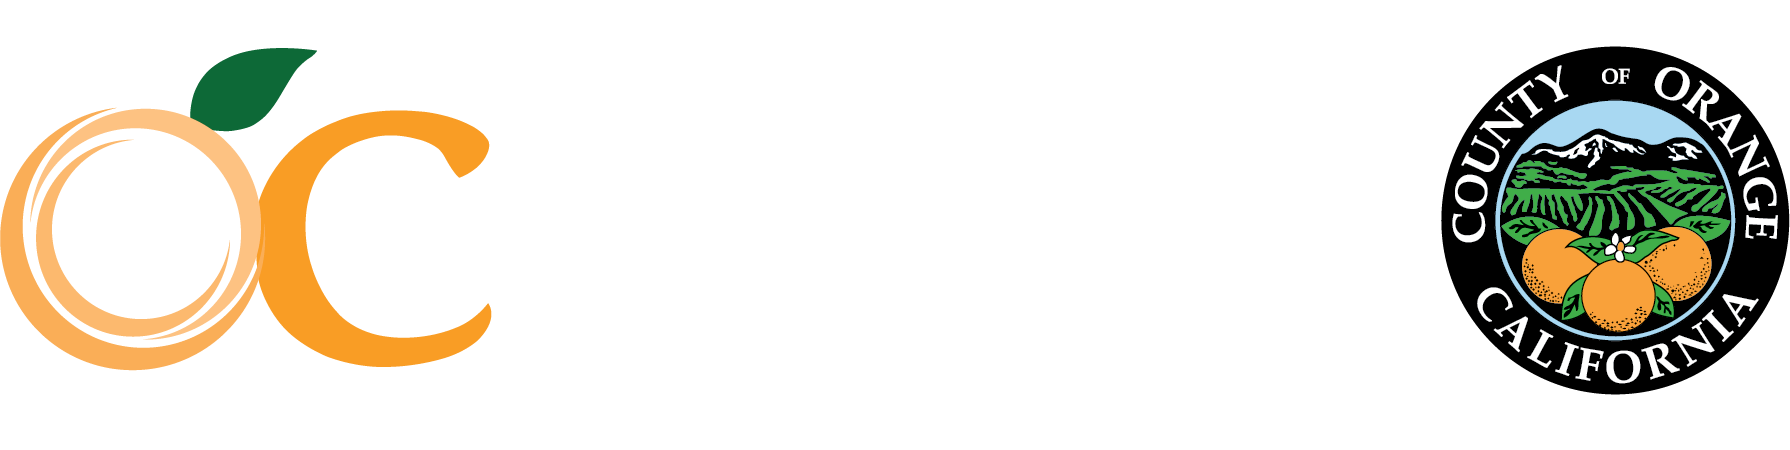 Orange County, California - Health Care Agency Logo -- Home